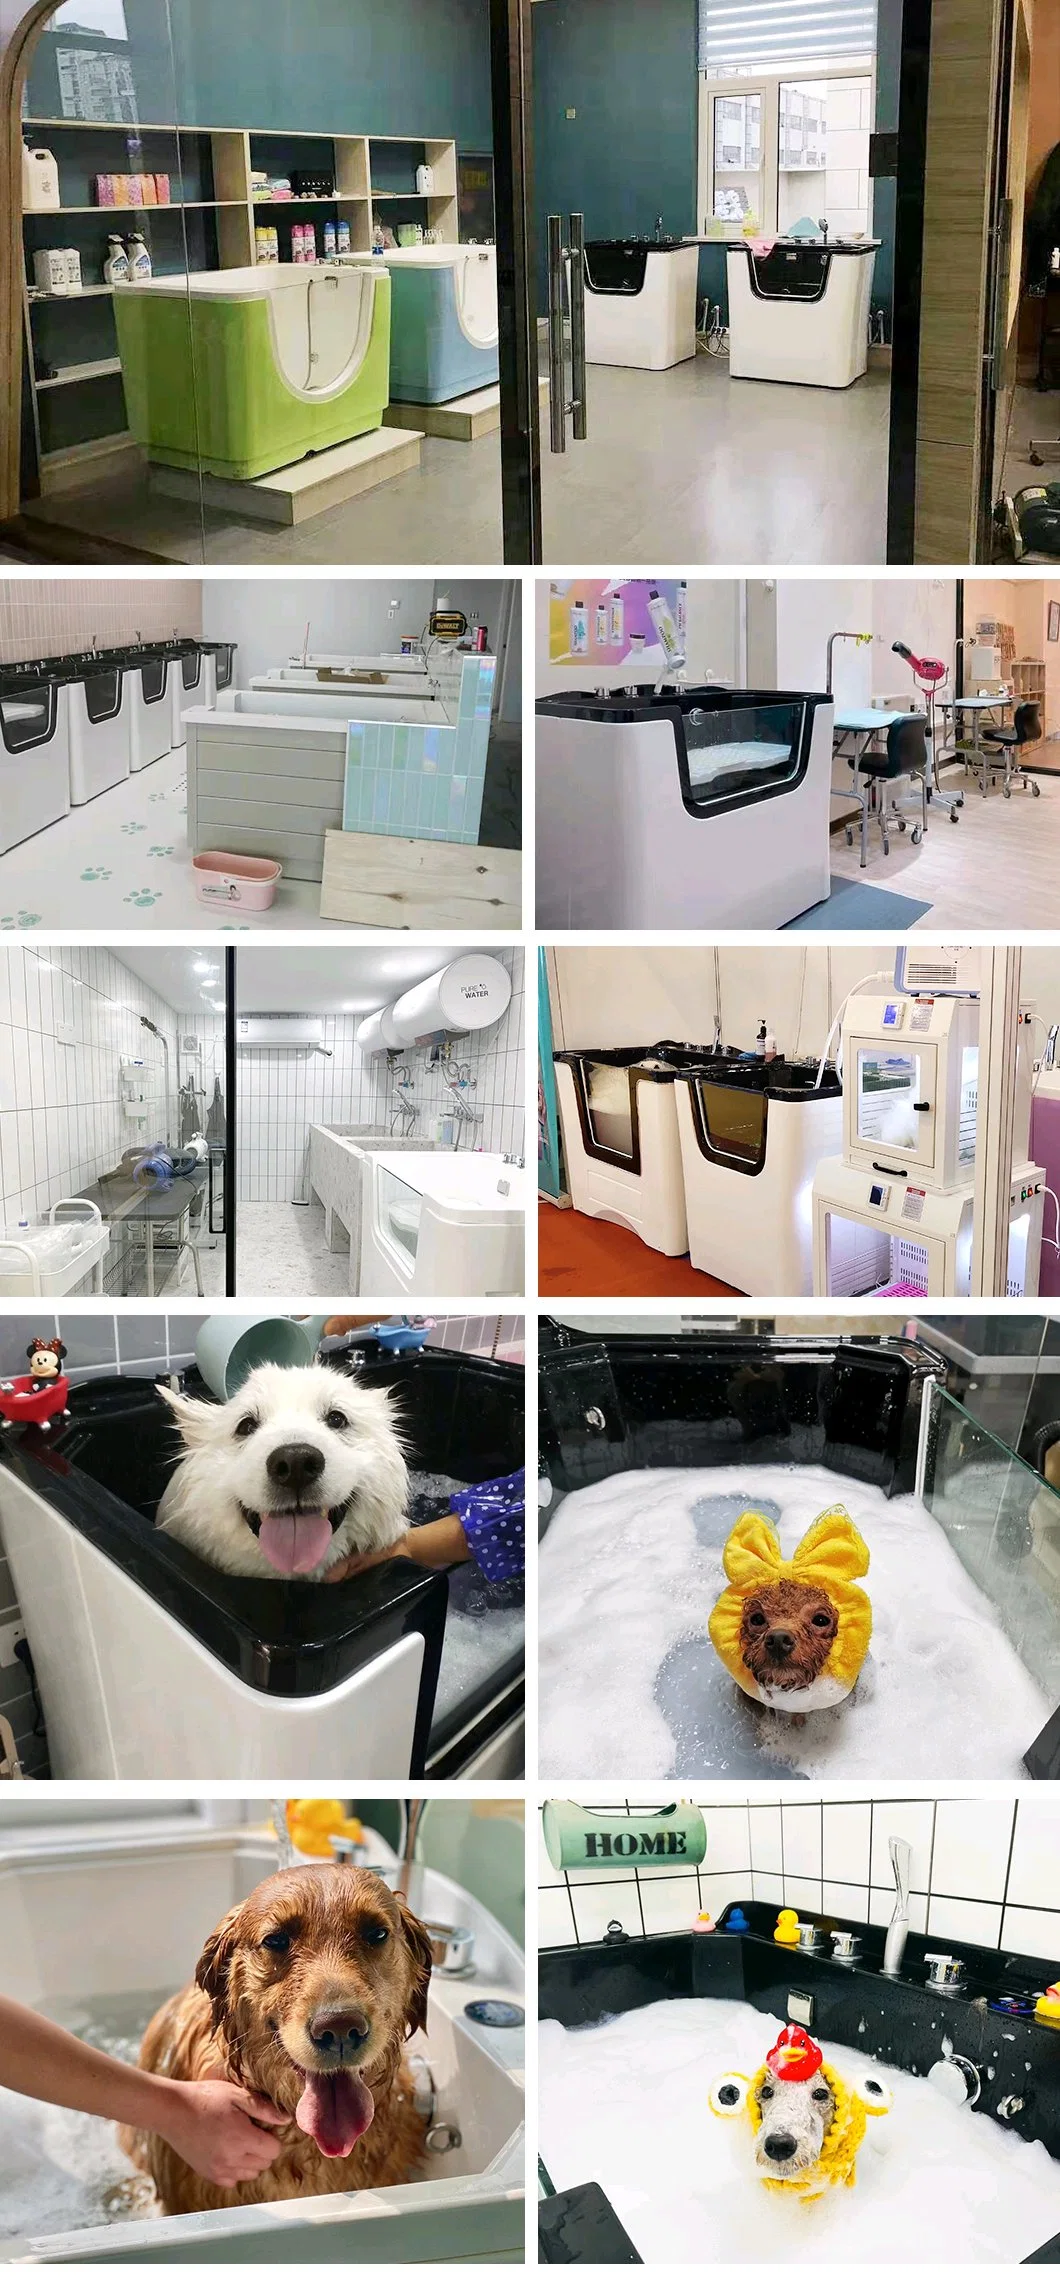 Acrylic Pet Bubble Tub Ozone Milk Bath Bathtub Pet Dog Cat Grooming Bathtub SPA for Pets